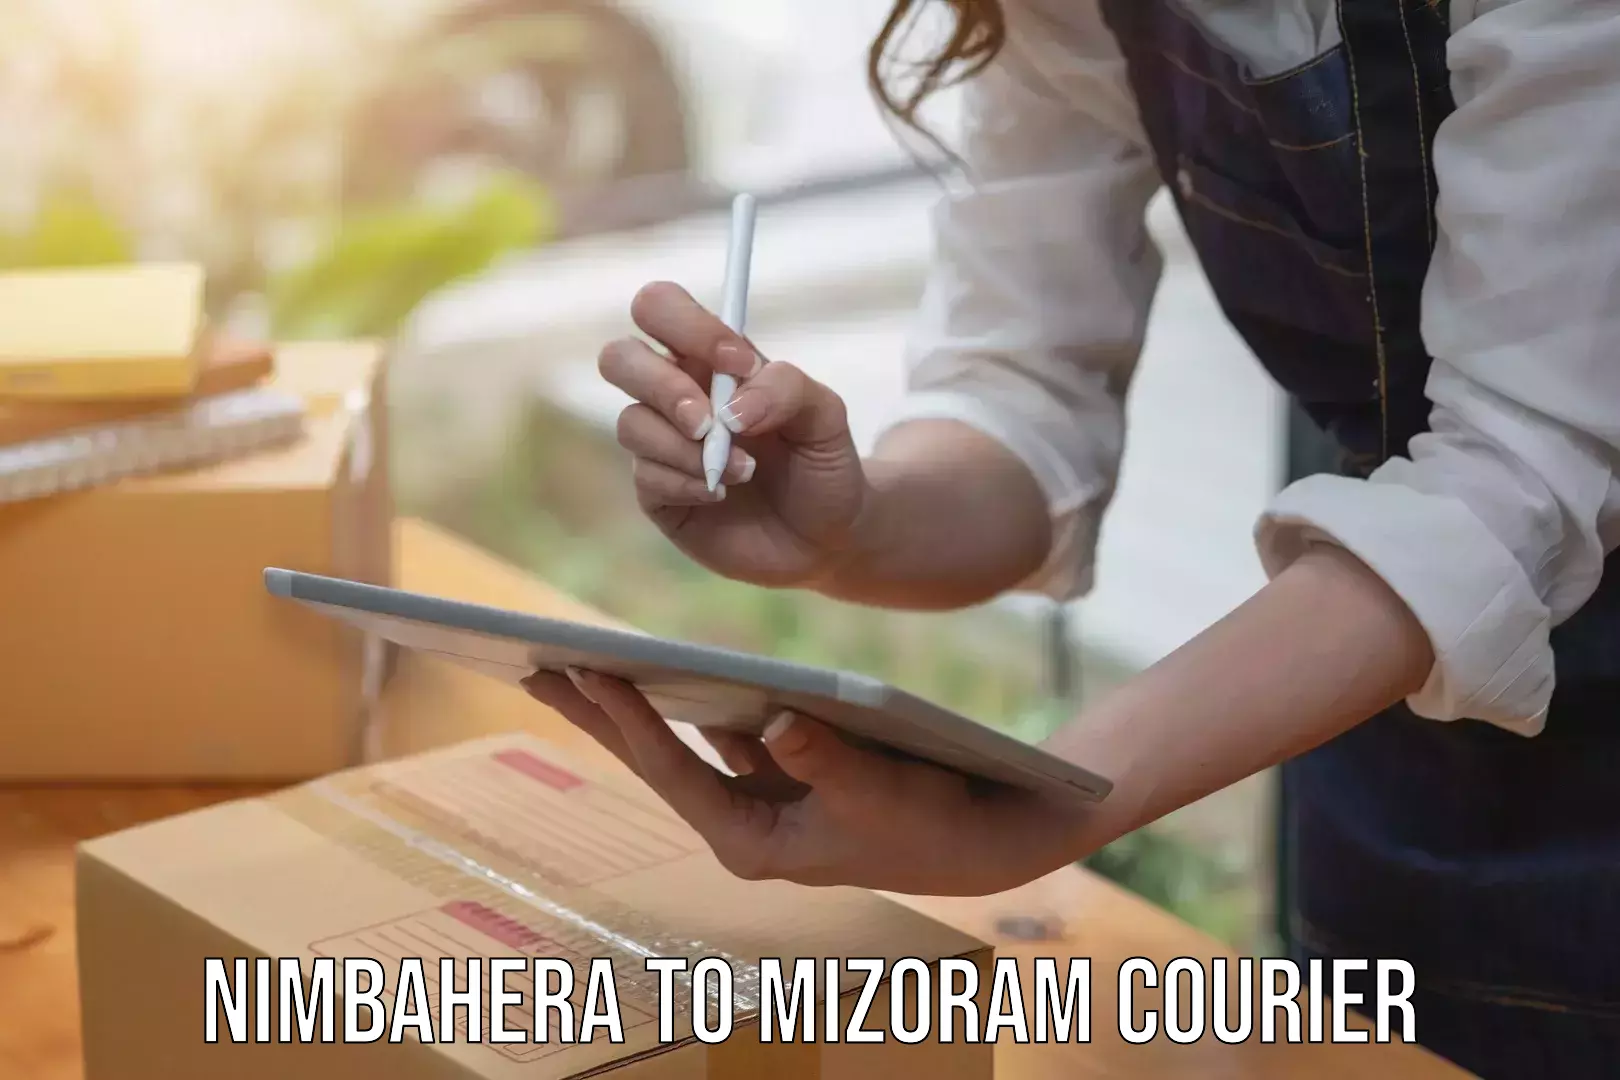 Professional courier handling Nimbahera to Mizoram